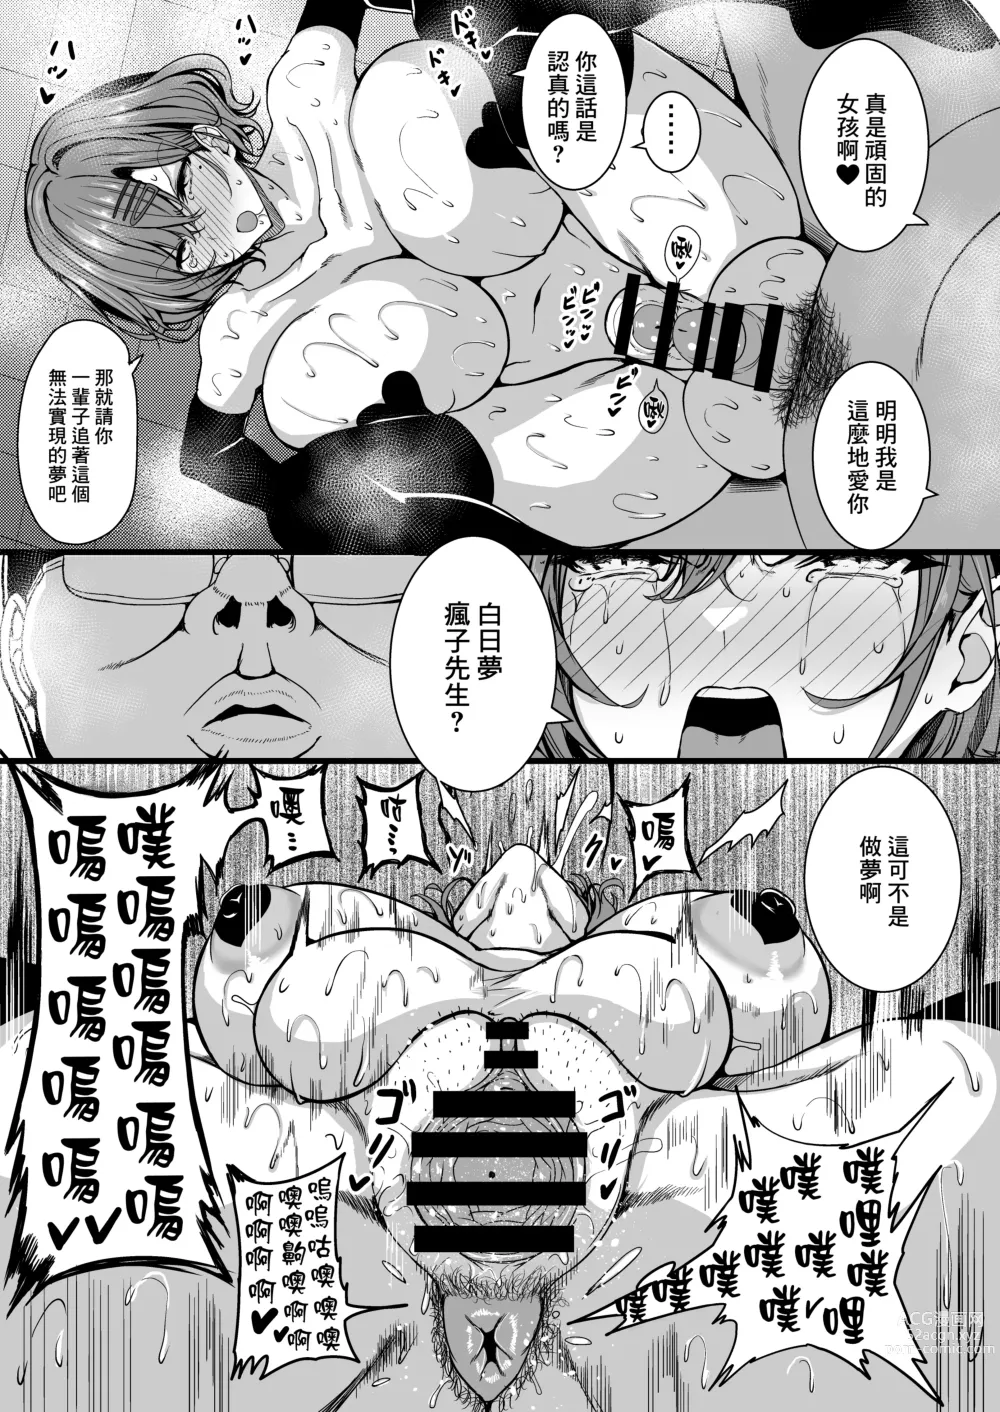 Page 16 of doujinshi HTSK15